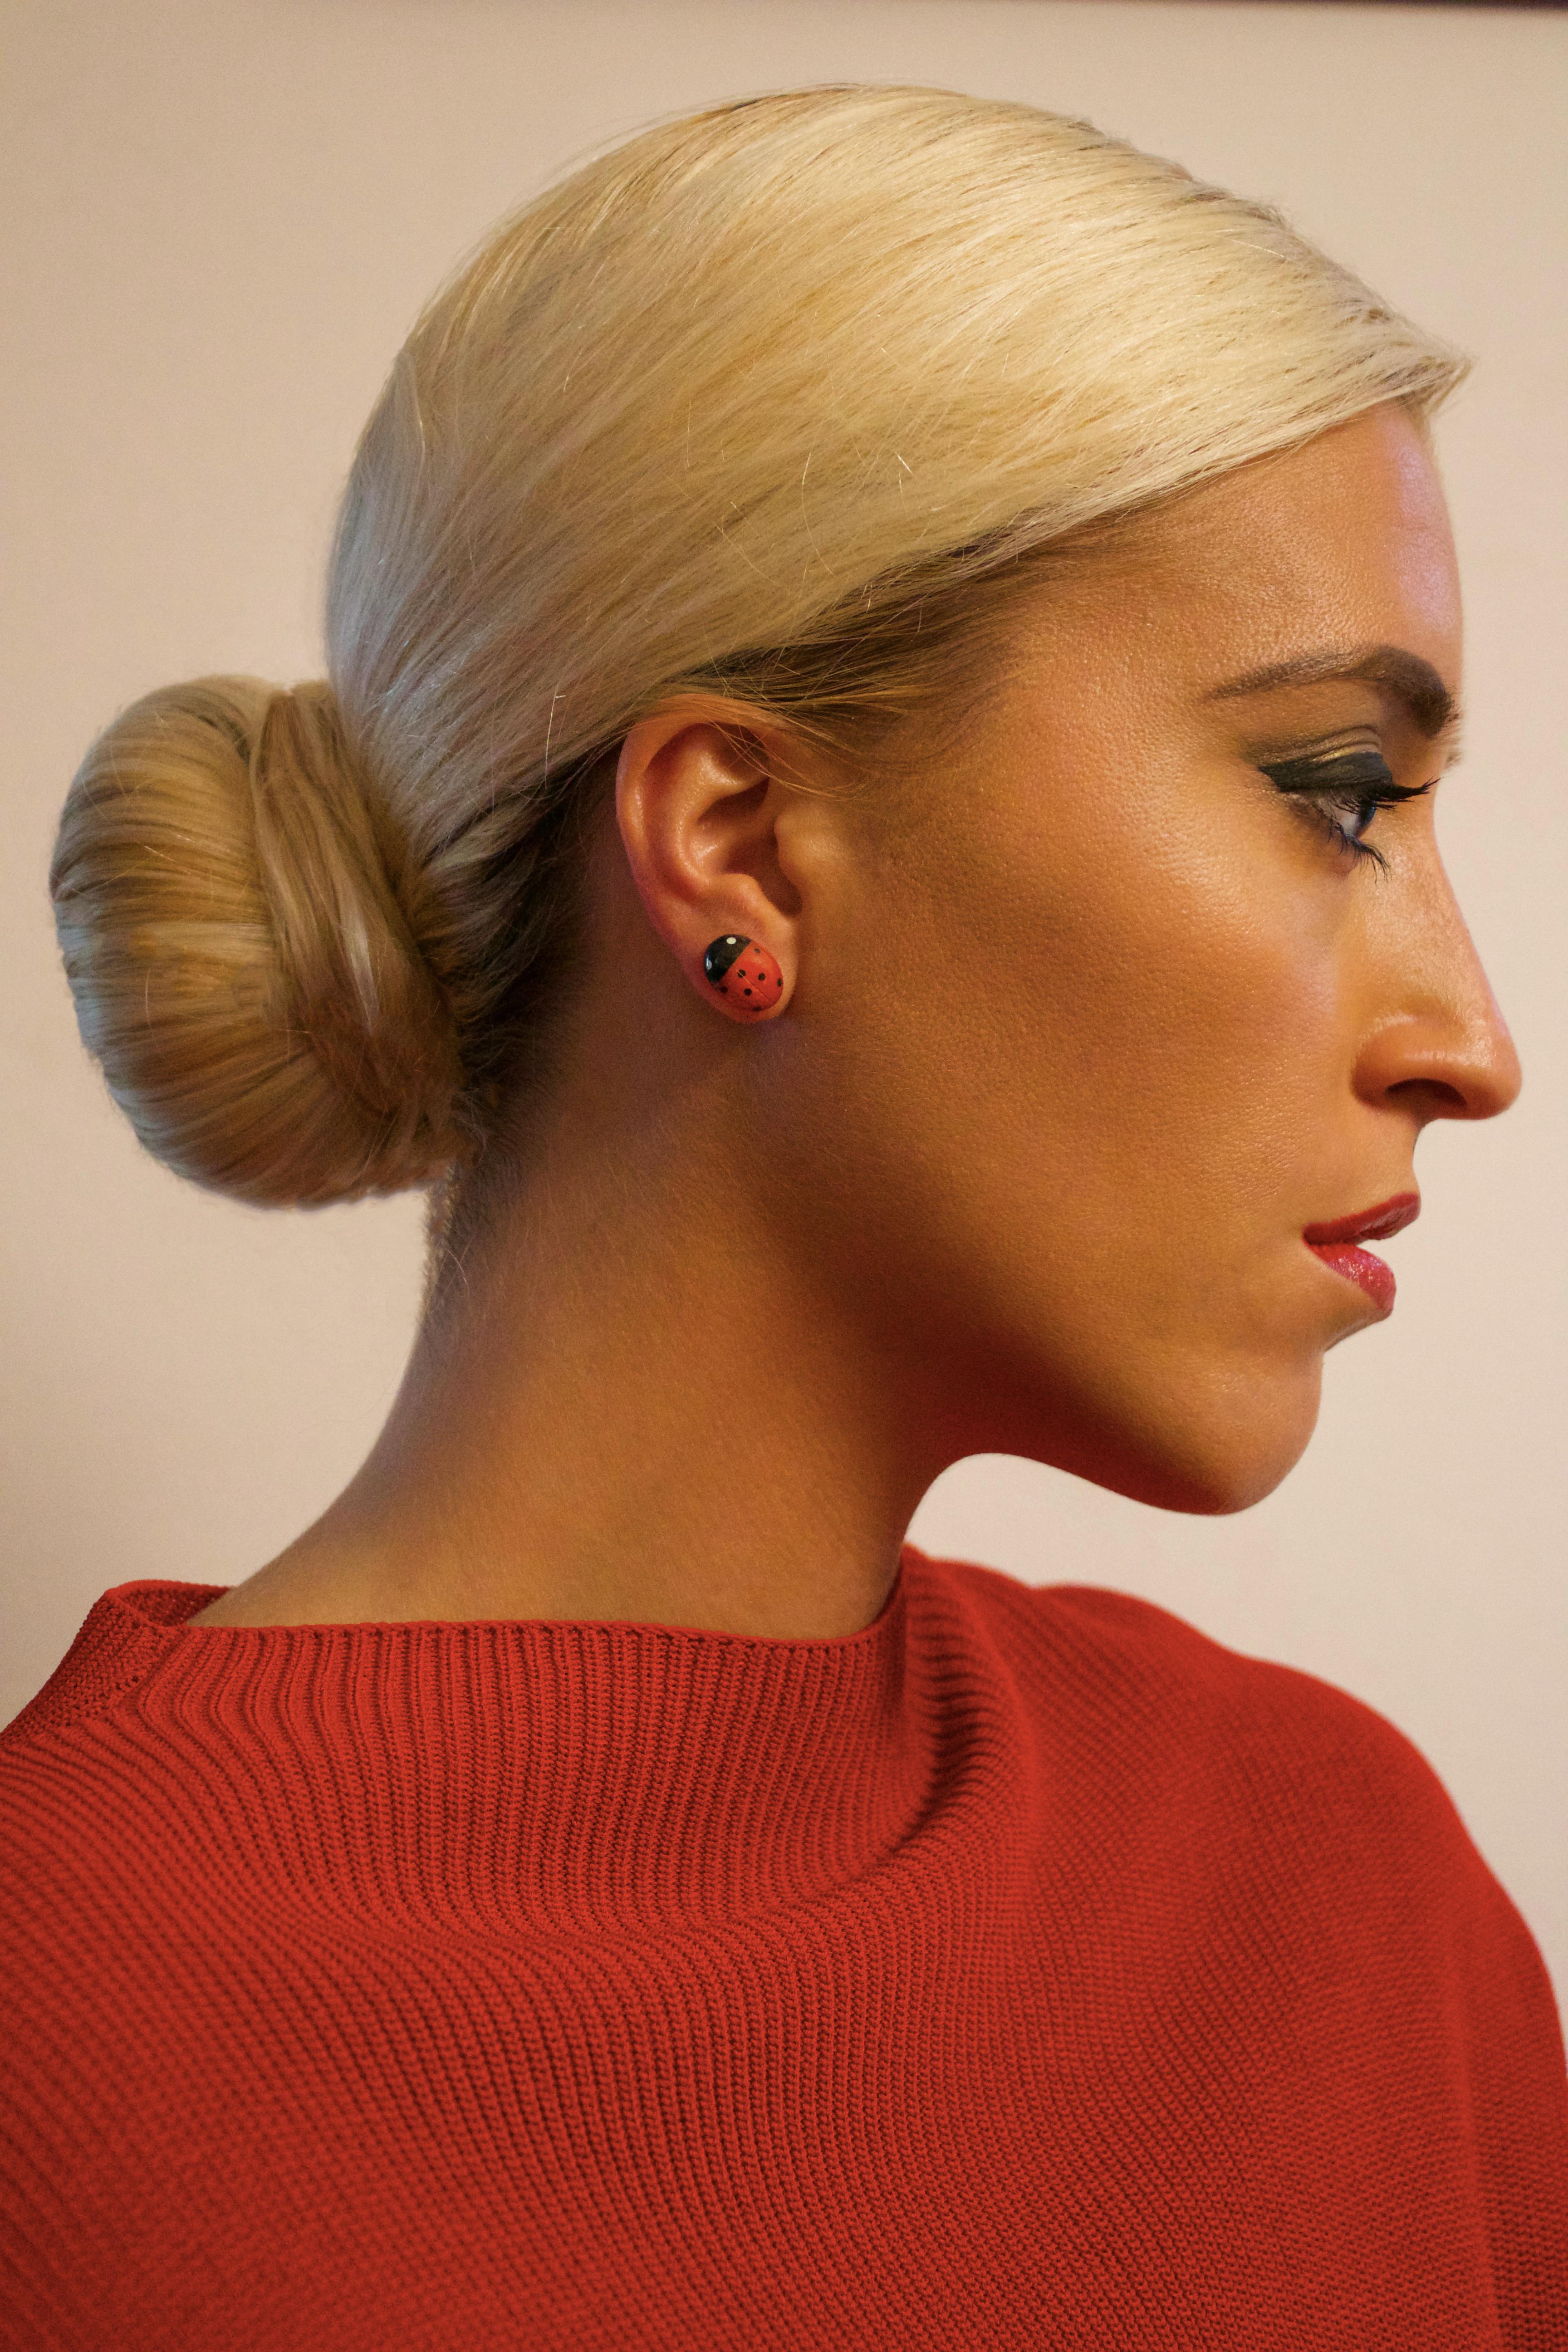 marinette's earrings